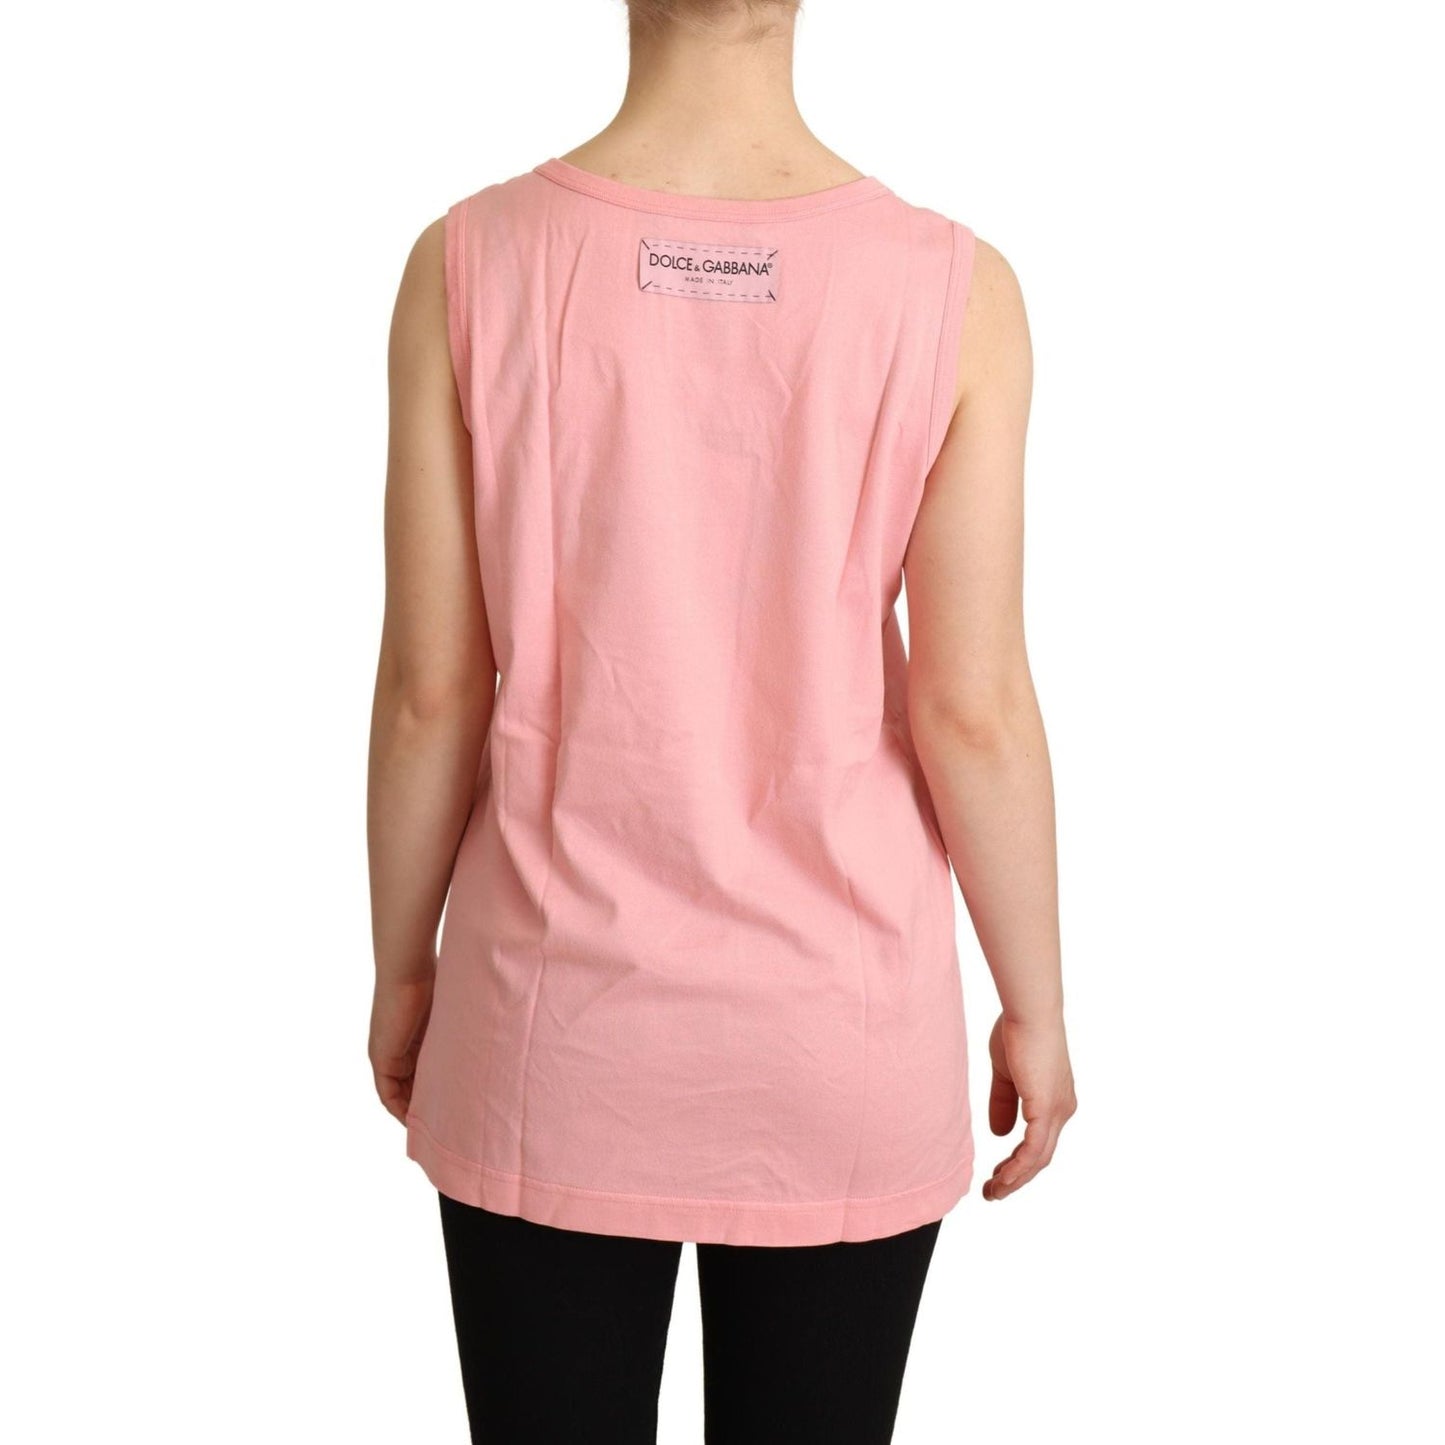 Dolce & Gabbana Chic Pink Motive Print Crewneck Tee WOMAN T-SHIRTS pink-all-the-lovers-tank-top-t-shirt IMG_9814-scaled-7daea3ad-3dd.jpg